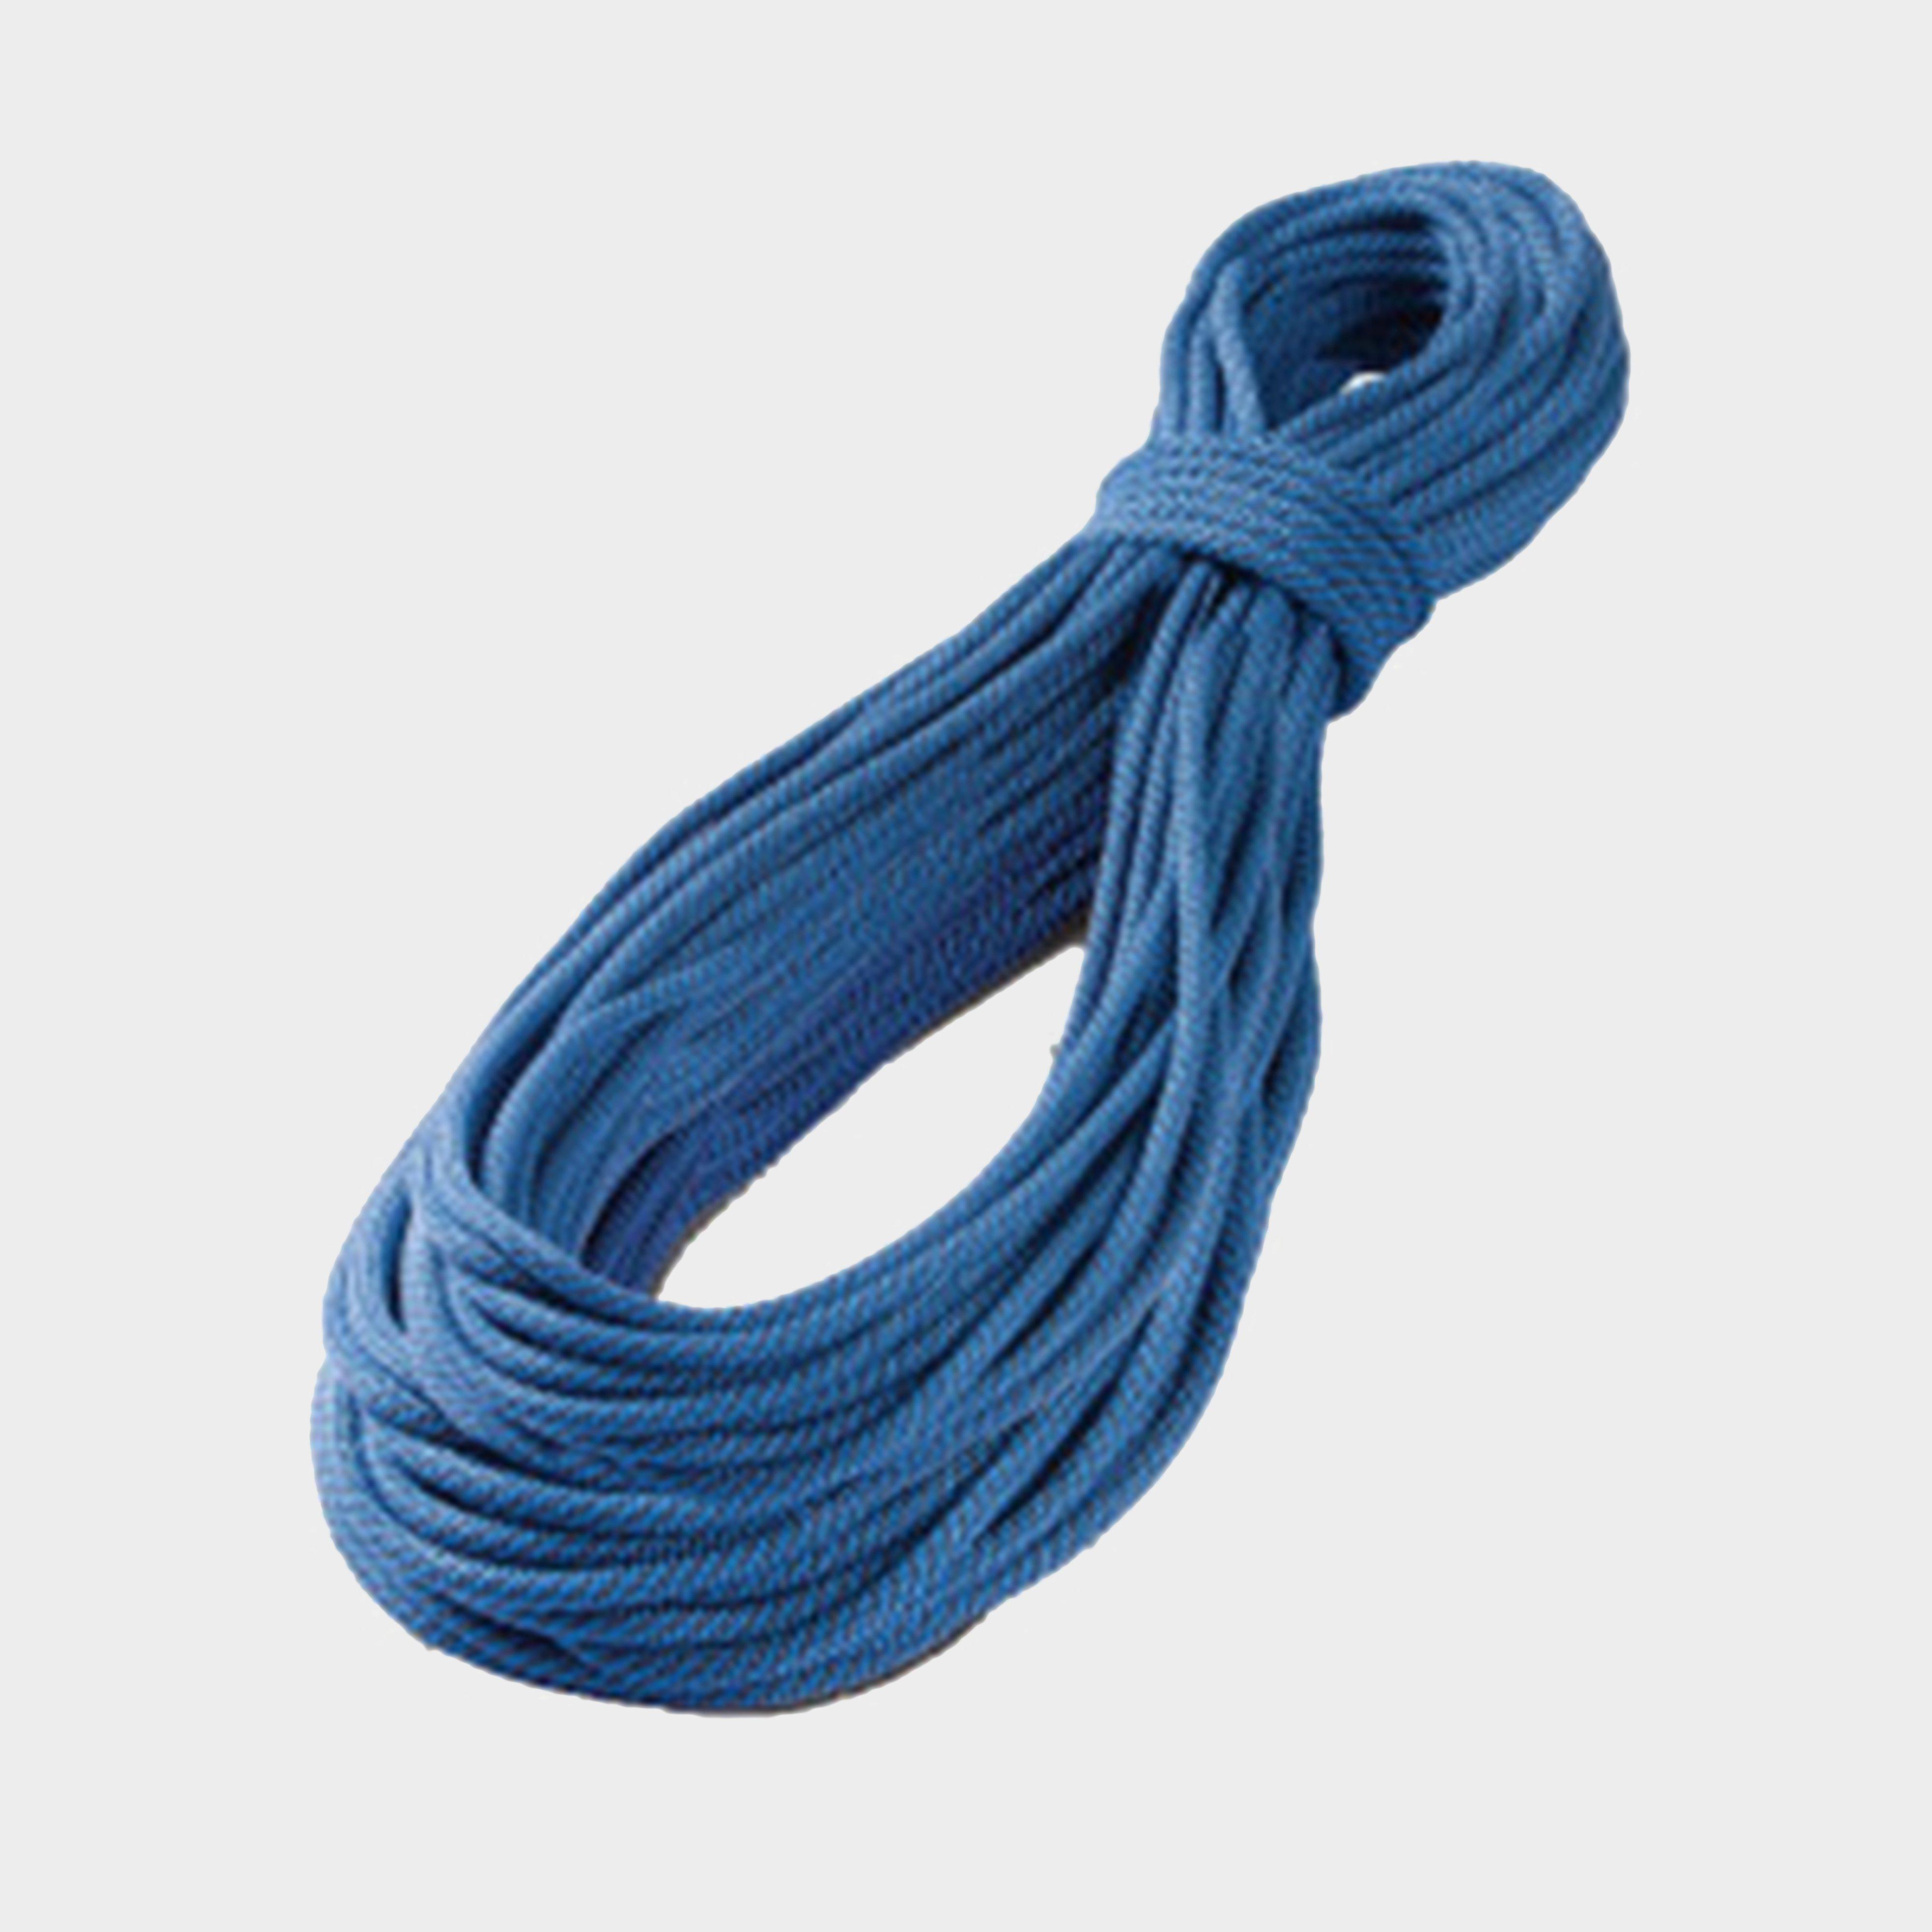  TENDON Master Rope 7.8 50m, Blue